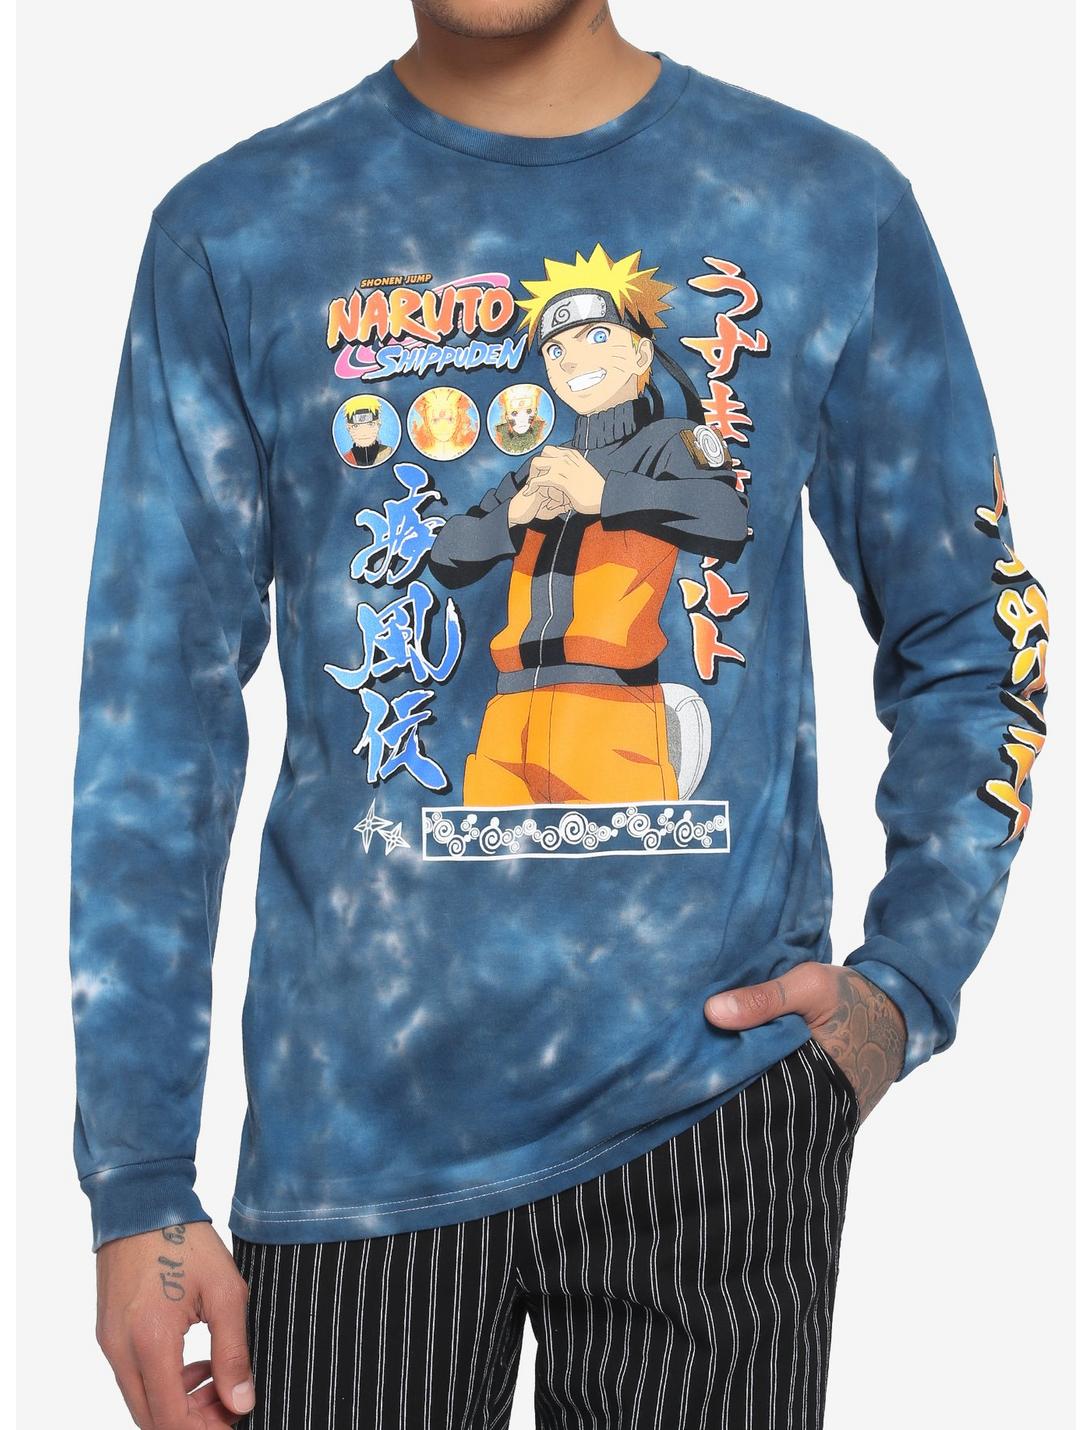 Naruto Shippuden Youth Long Sleeve T Shirt 